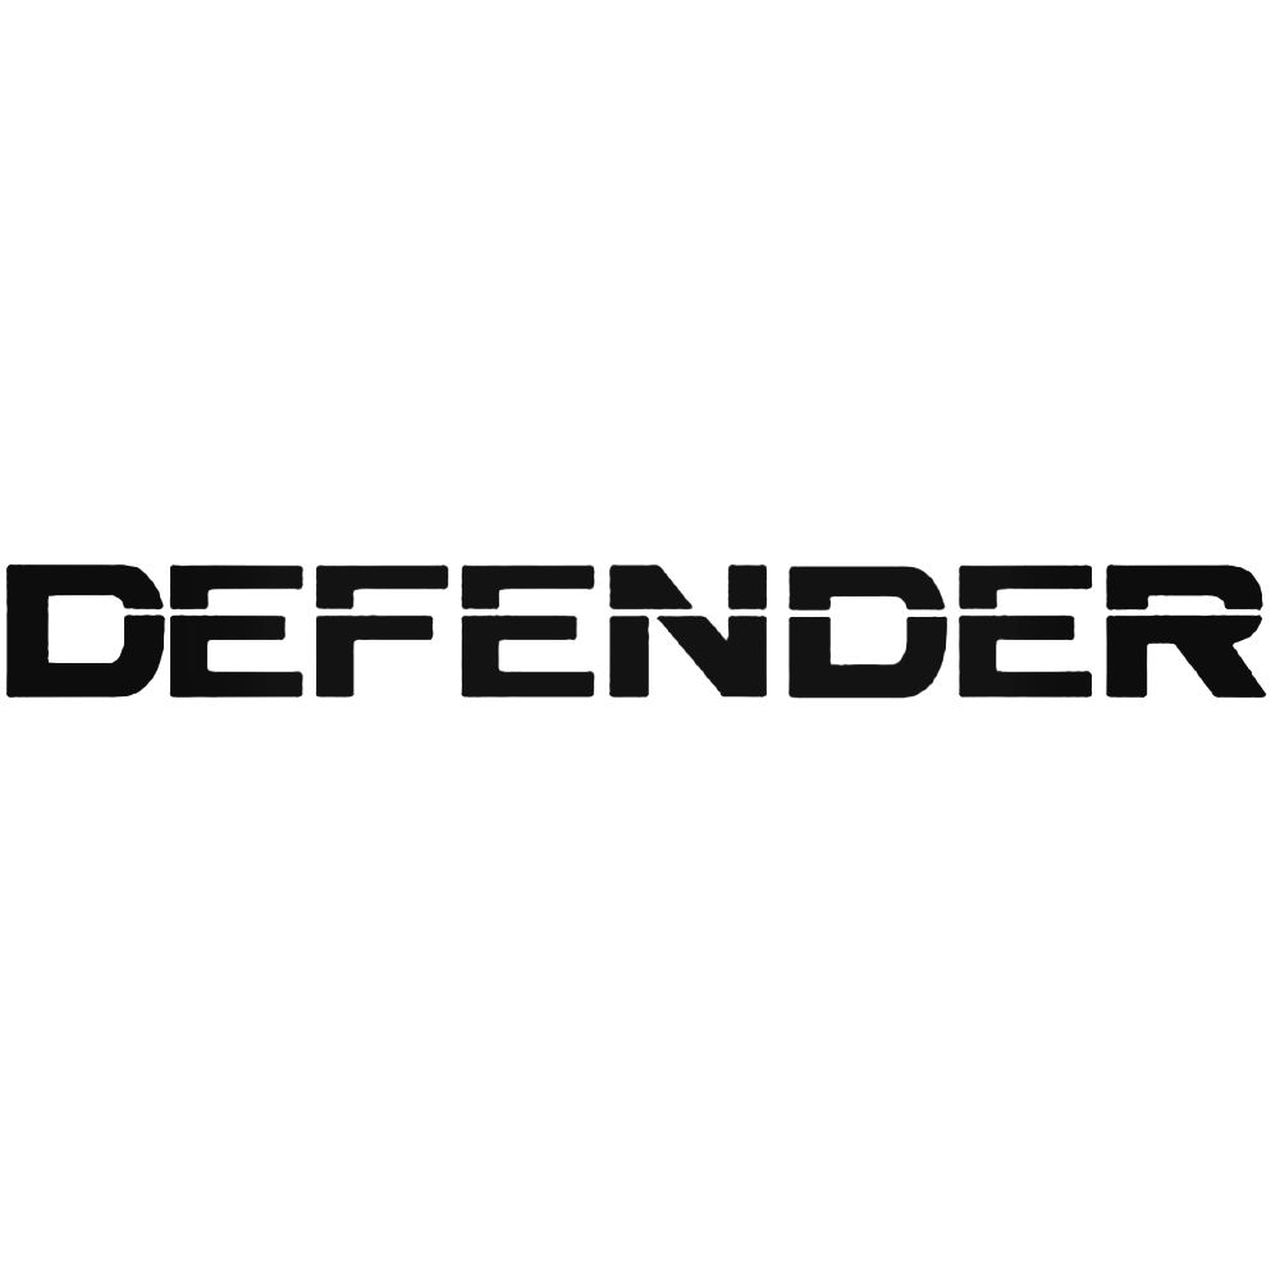 Defender energy. Defender надпись. Дефендер лого. Defender Land Rover логотип вектор. Картриджи Defender логотип.